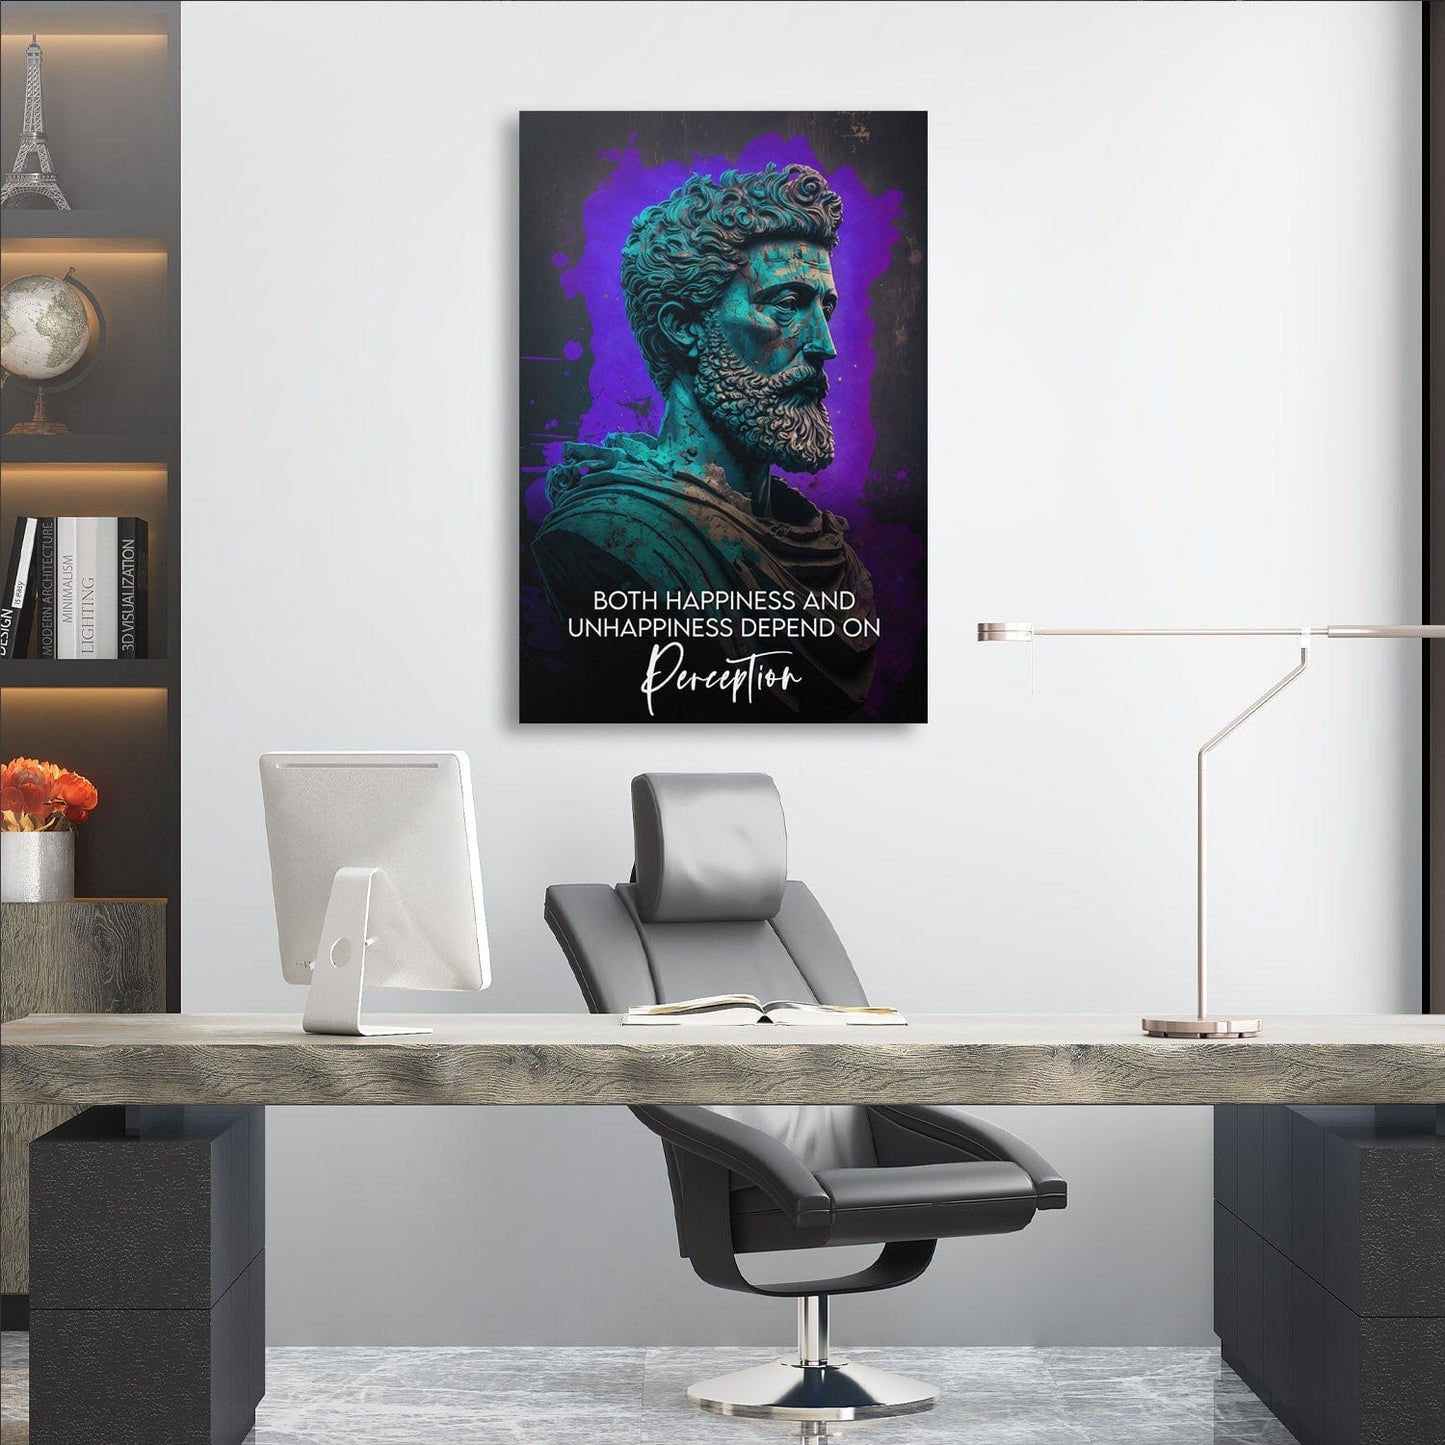 Marcus Aurelius - Perception Quote Wall Art | Inspirational Wall Art Motivational Wall Art Quotes Office Art | ImpaktMaker Exclusive Canvas Art Portrait